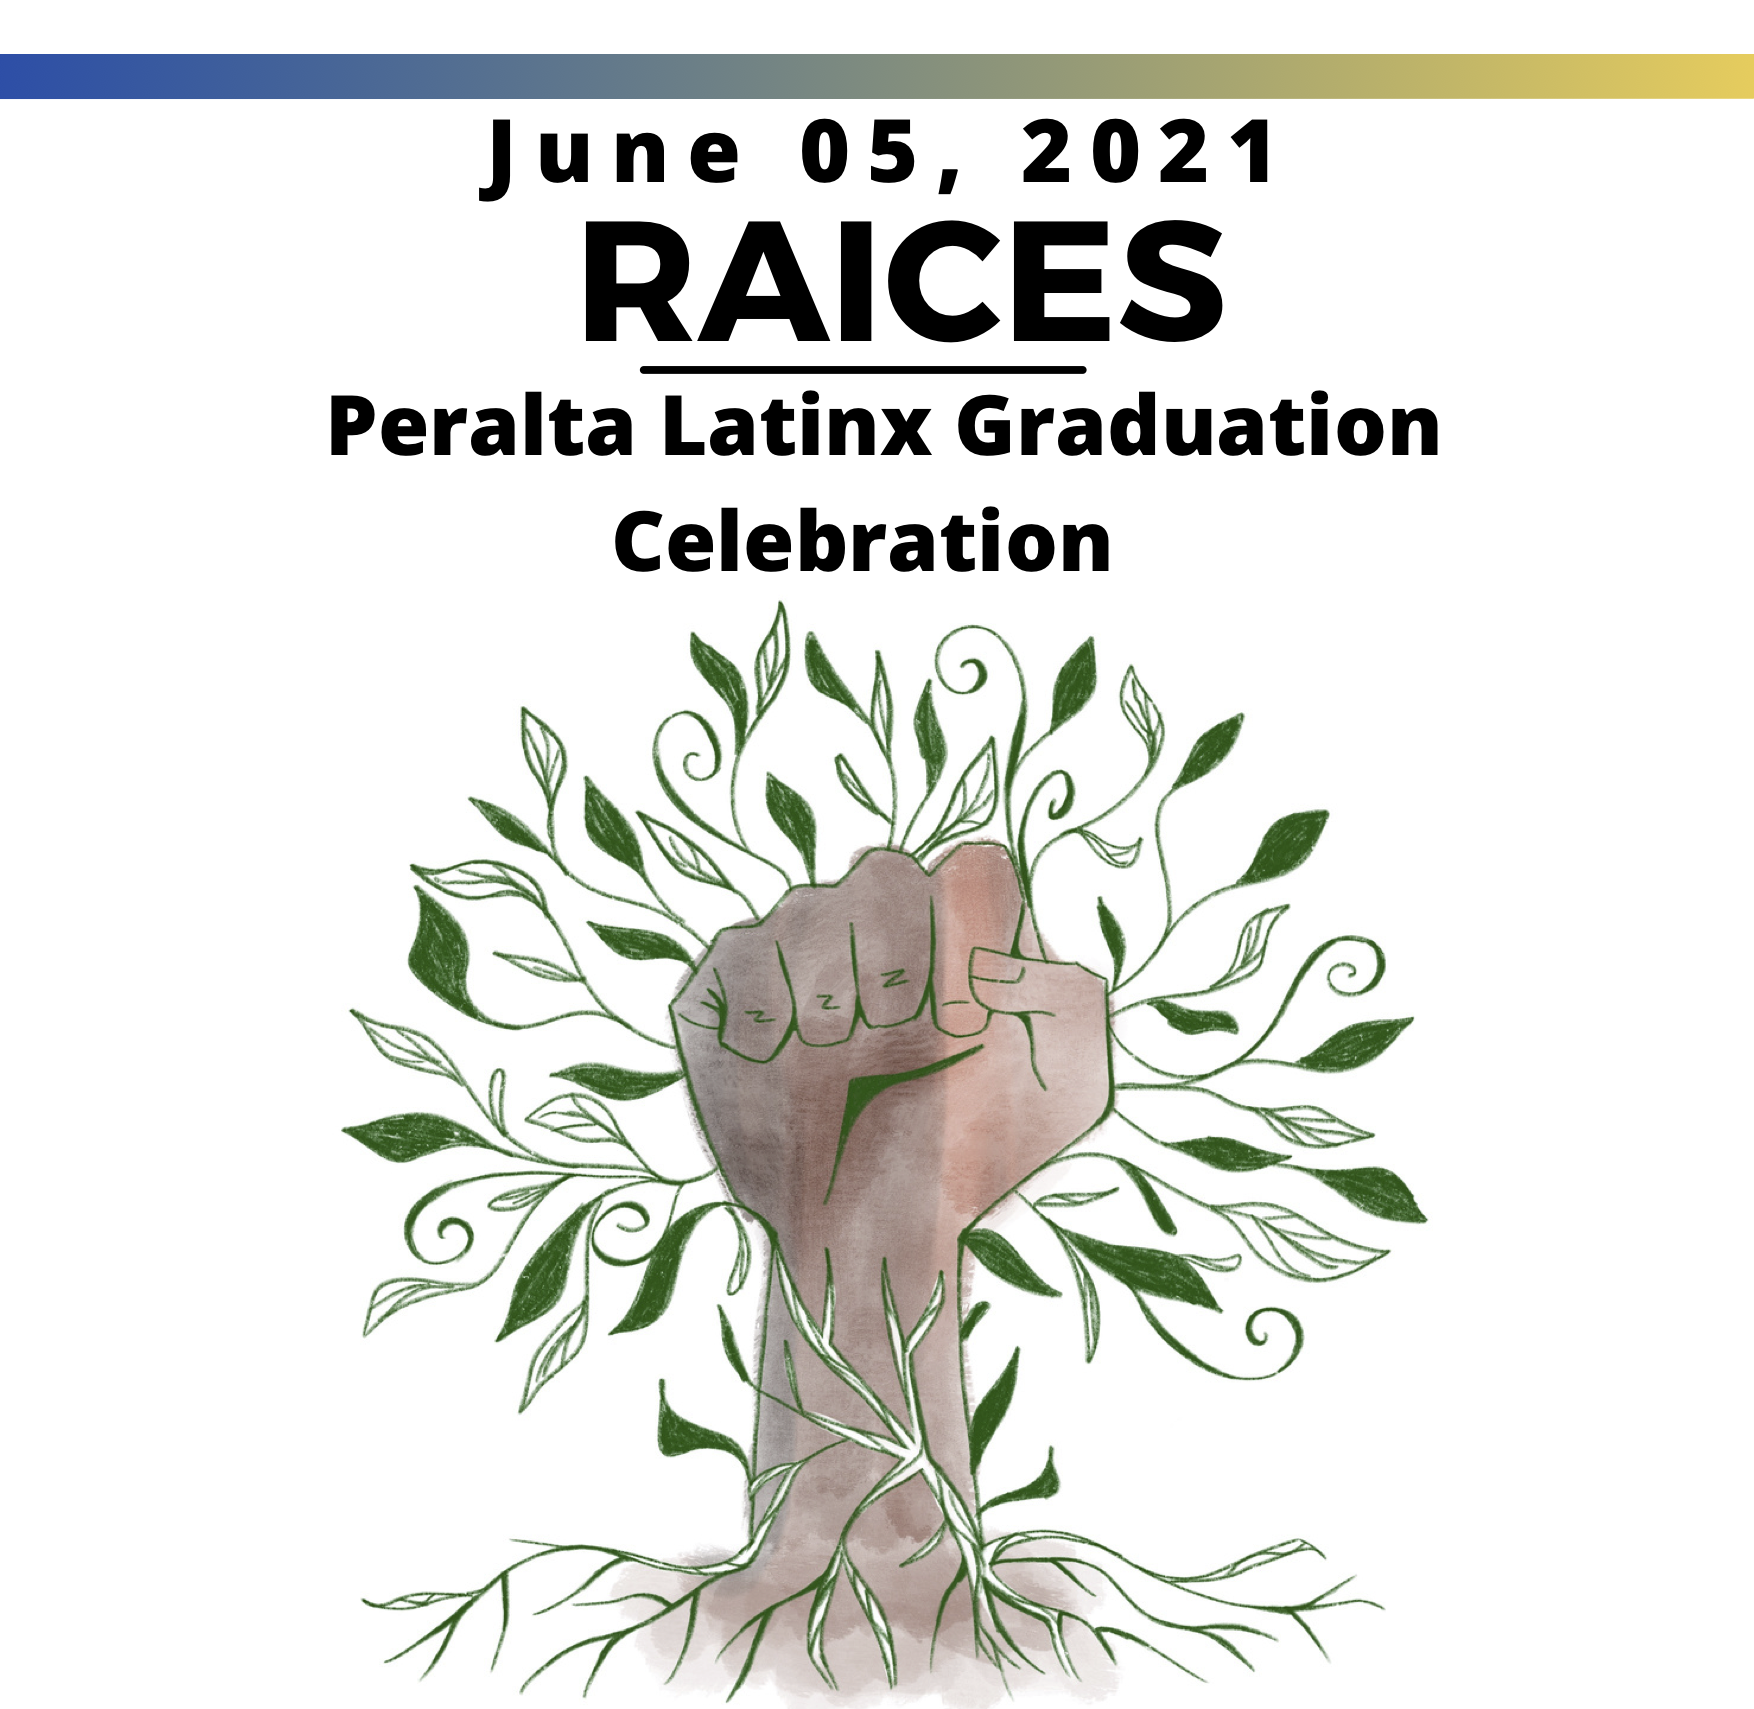 Raices Peralta Latinx Graduation Celebration Flyer image